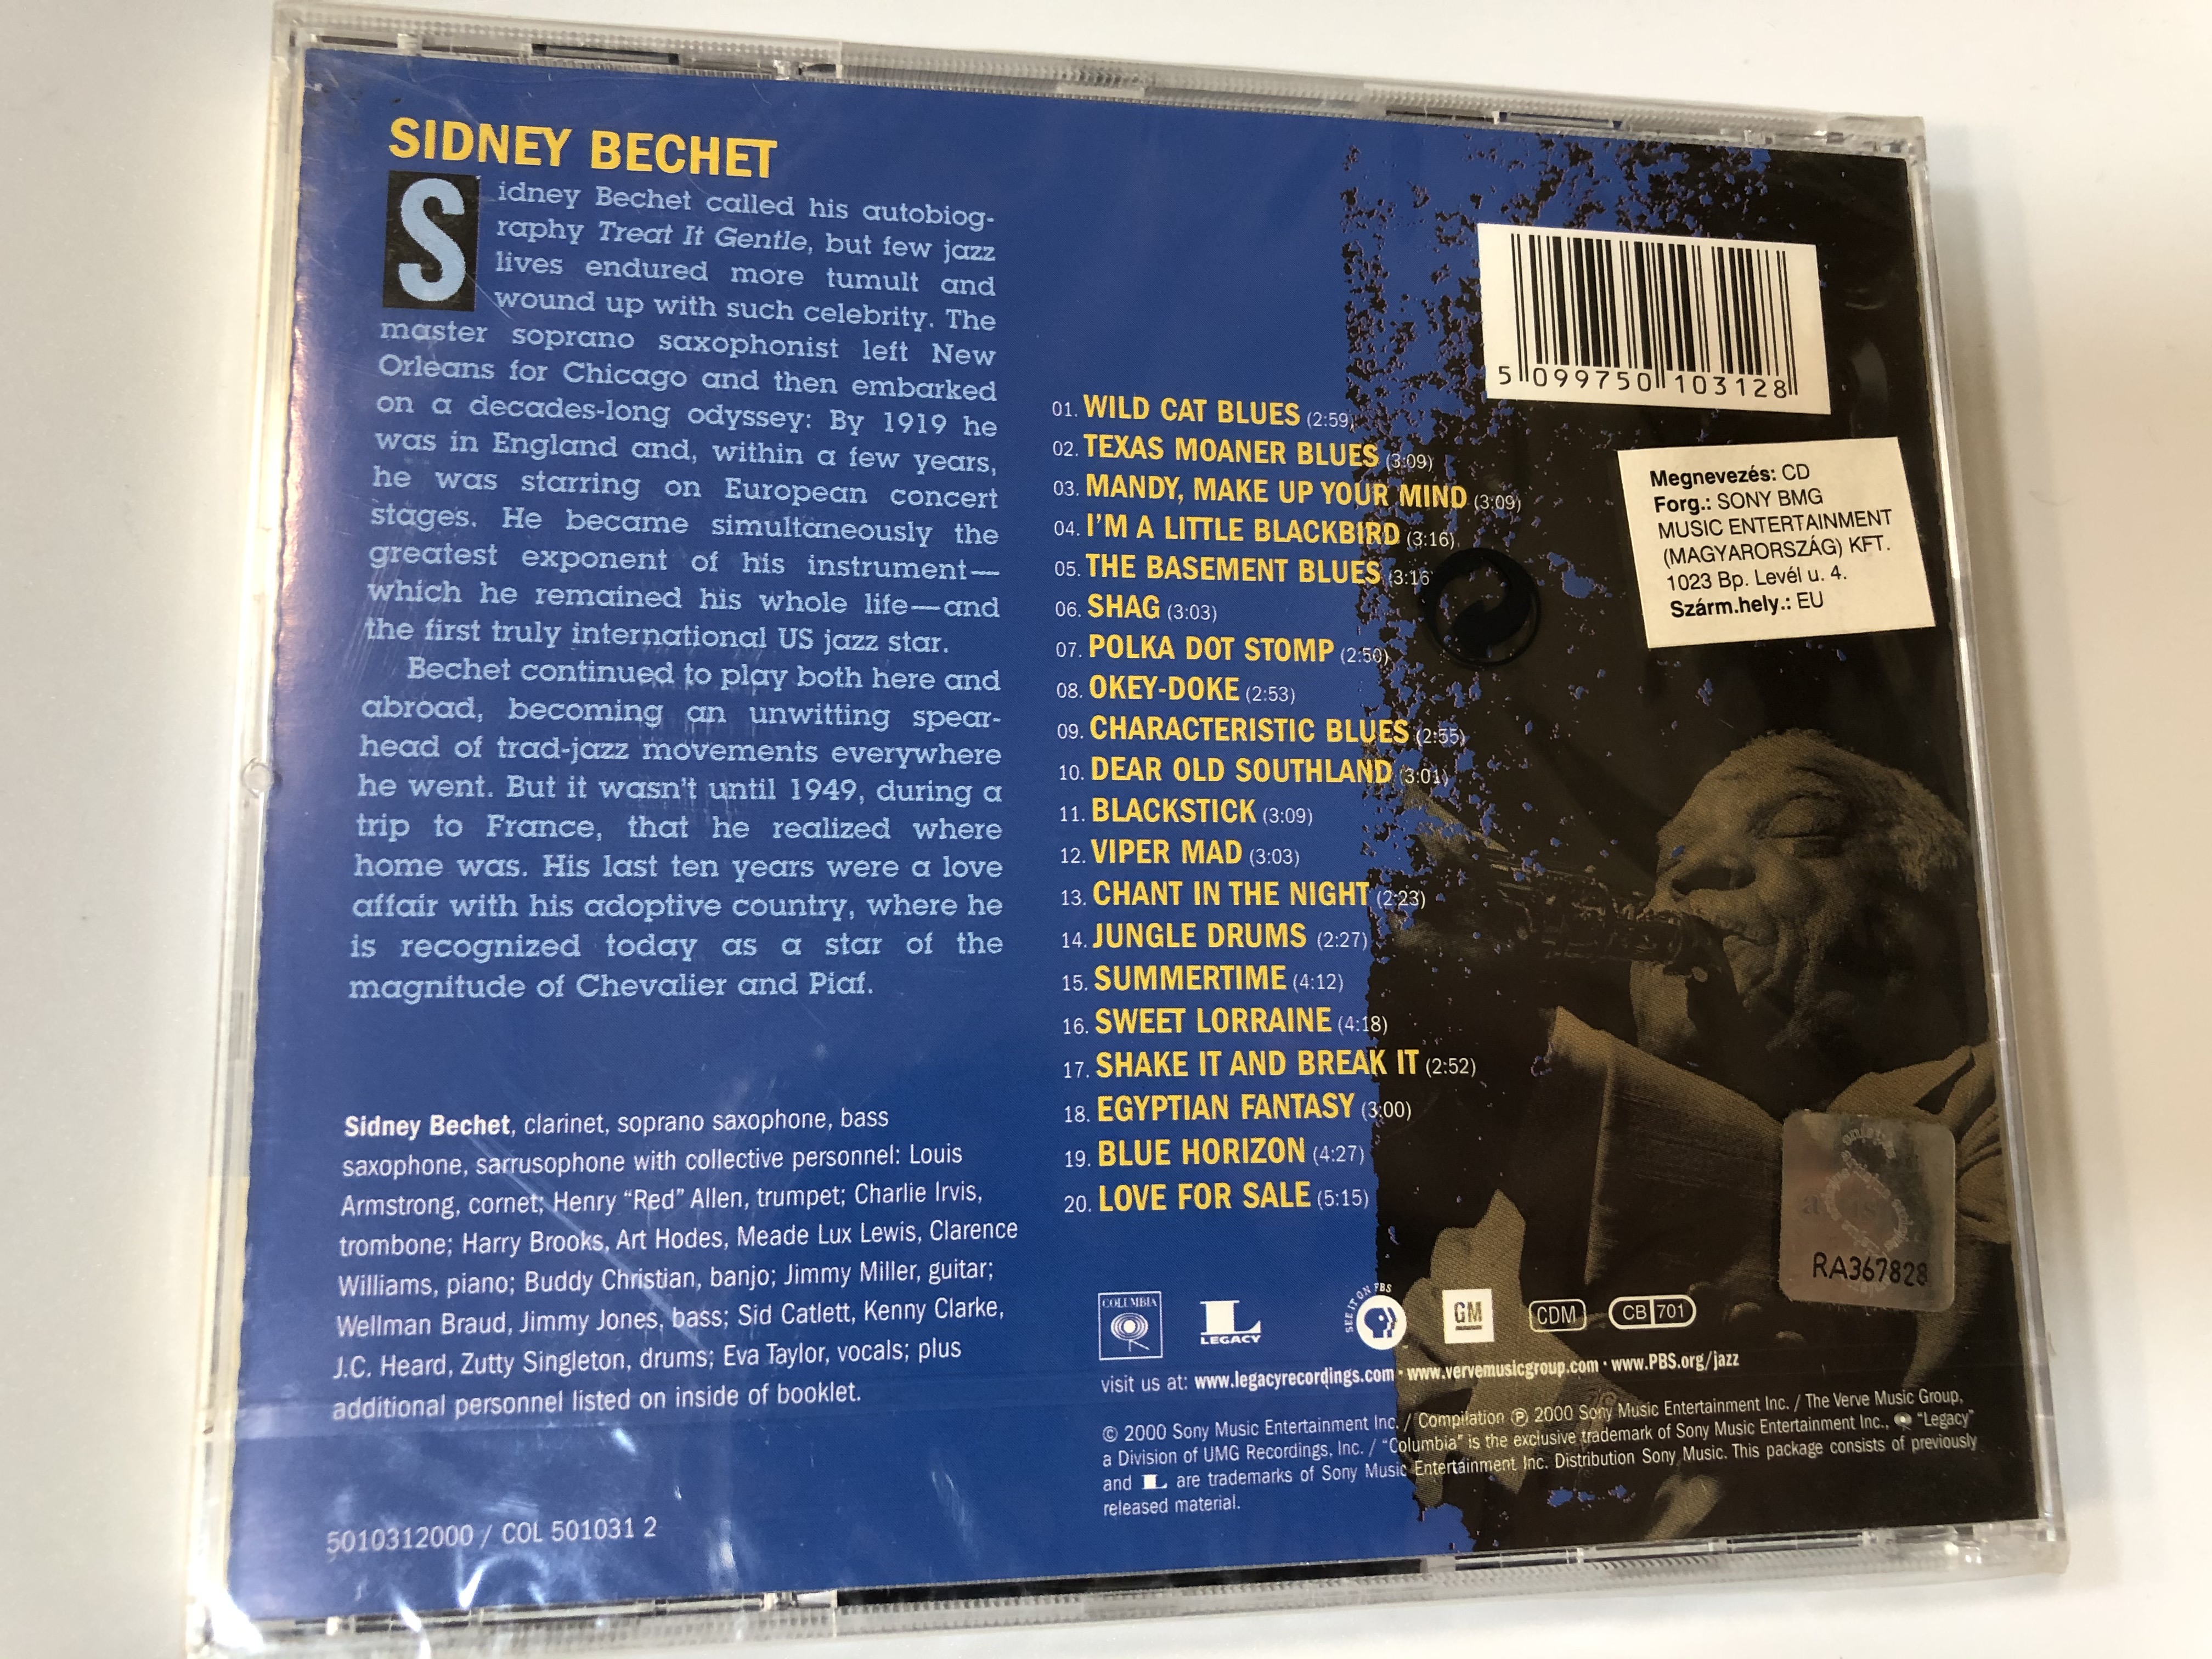 sidney-bechet-ken-burns-jazz-legacy-audio-cd-2000-501031-2-2-.jpg